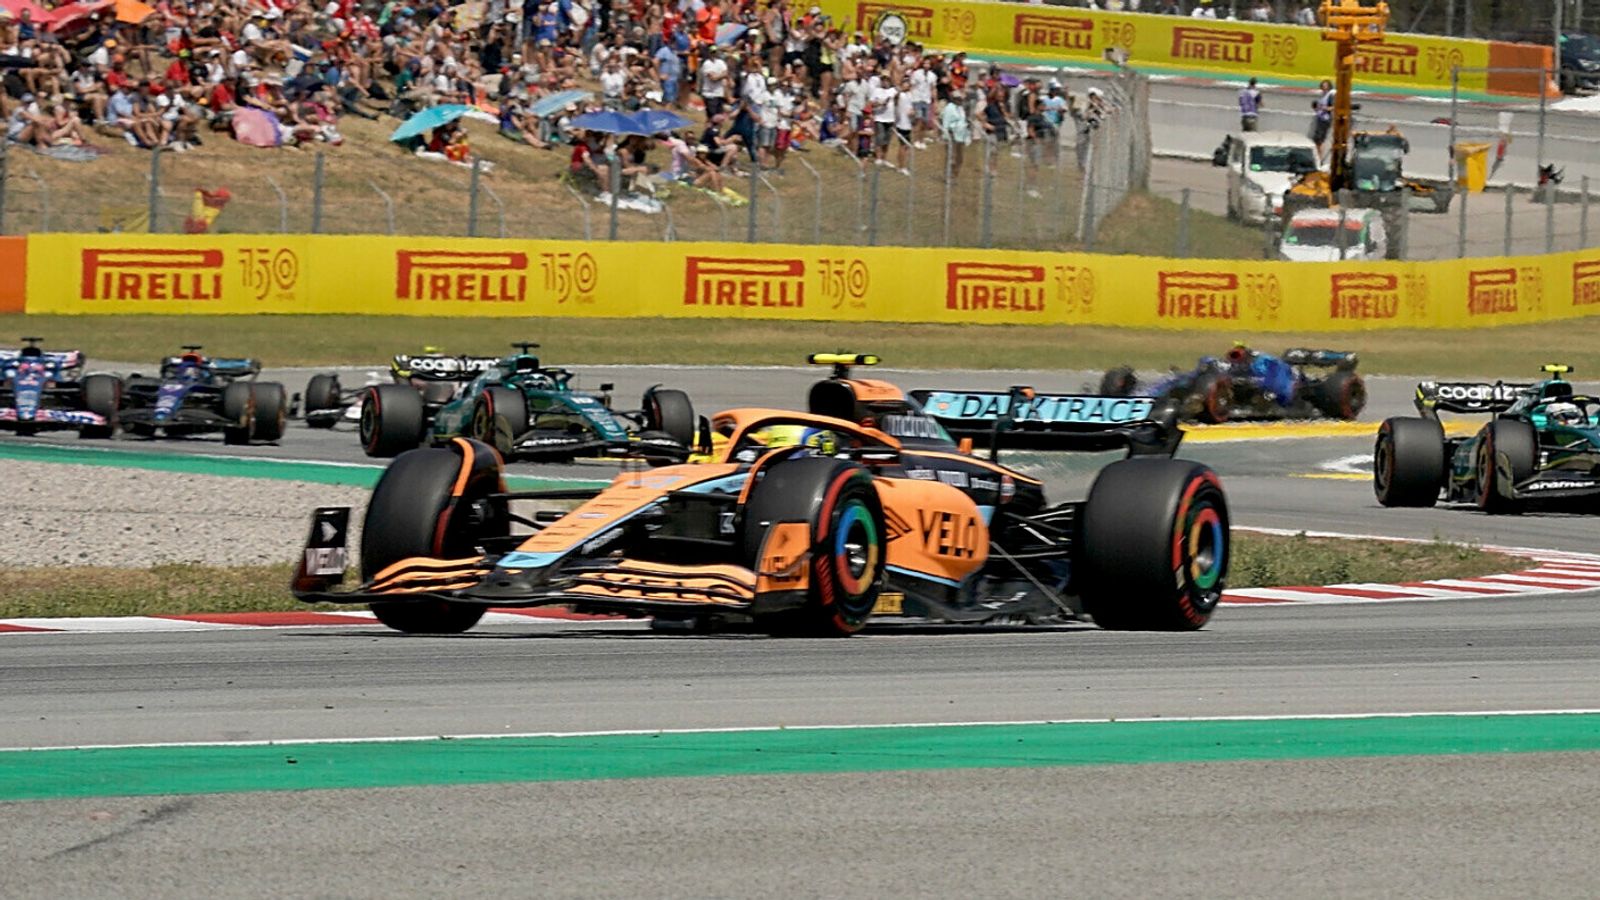 Spanish Grand Prix: Lando Norris taken for post-race medical check after tonsillitis diagnosis